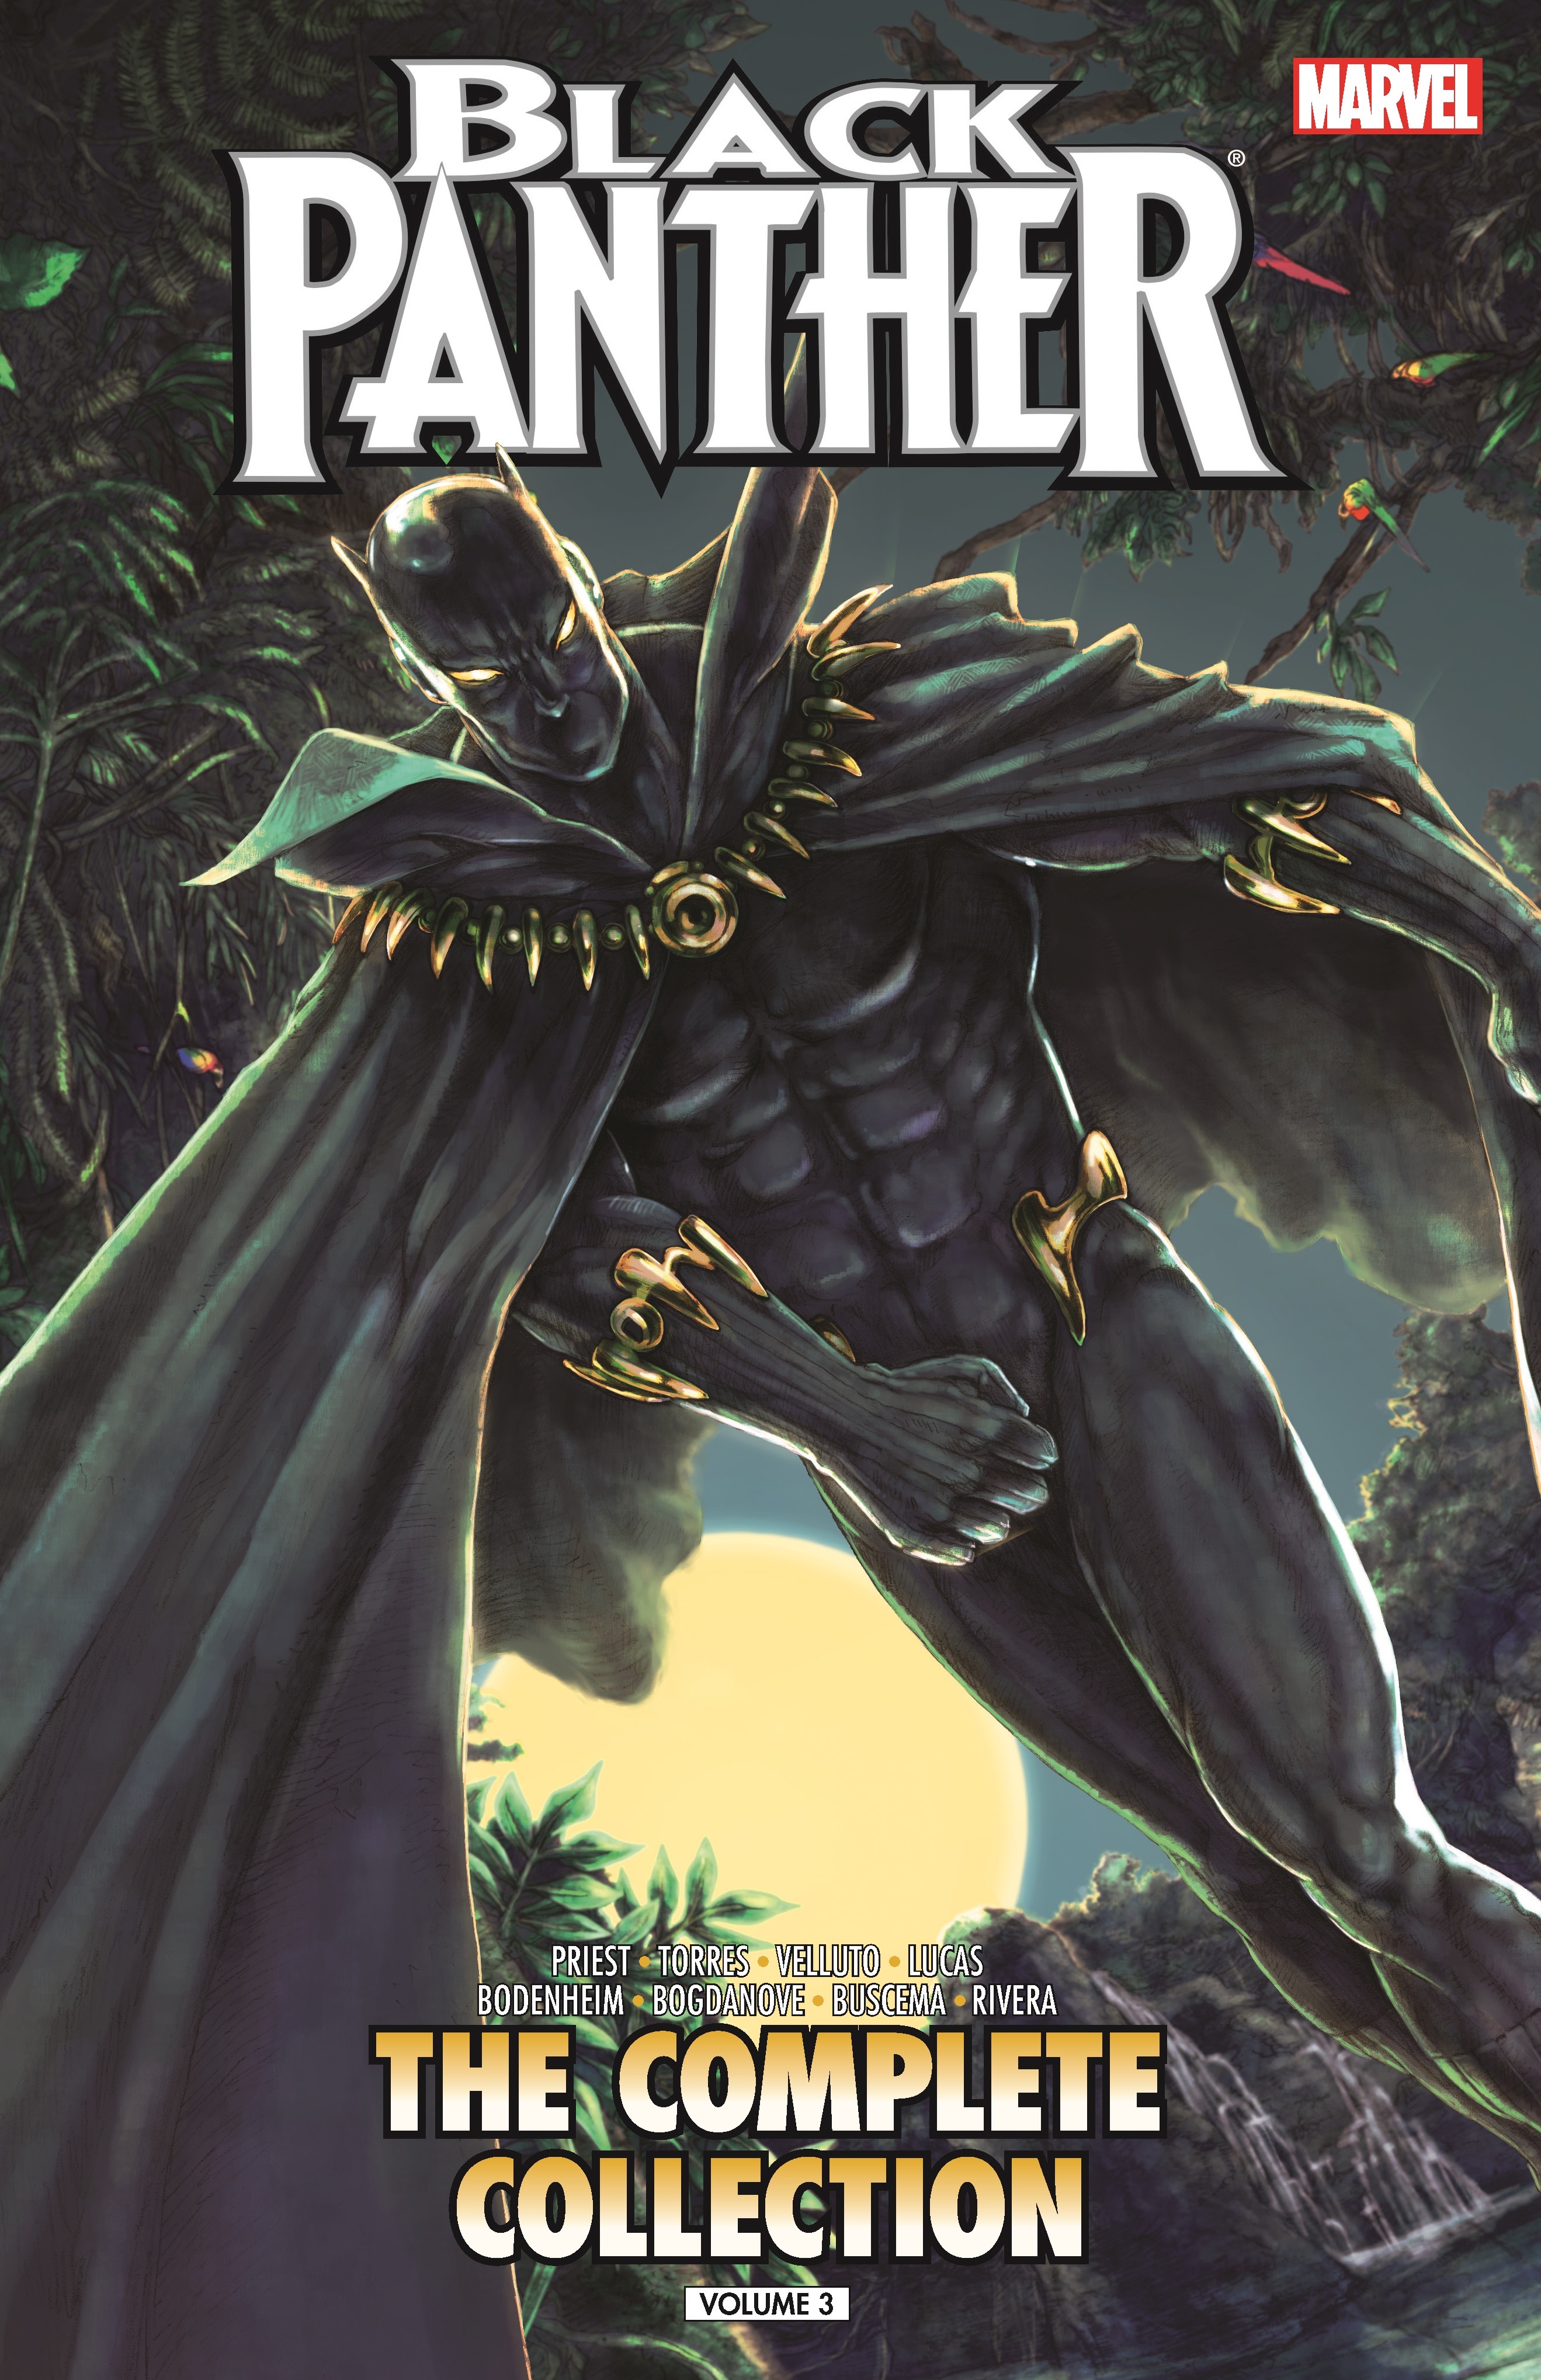 Black Panther comic, vol. 3